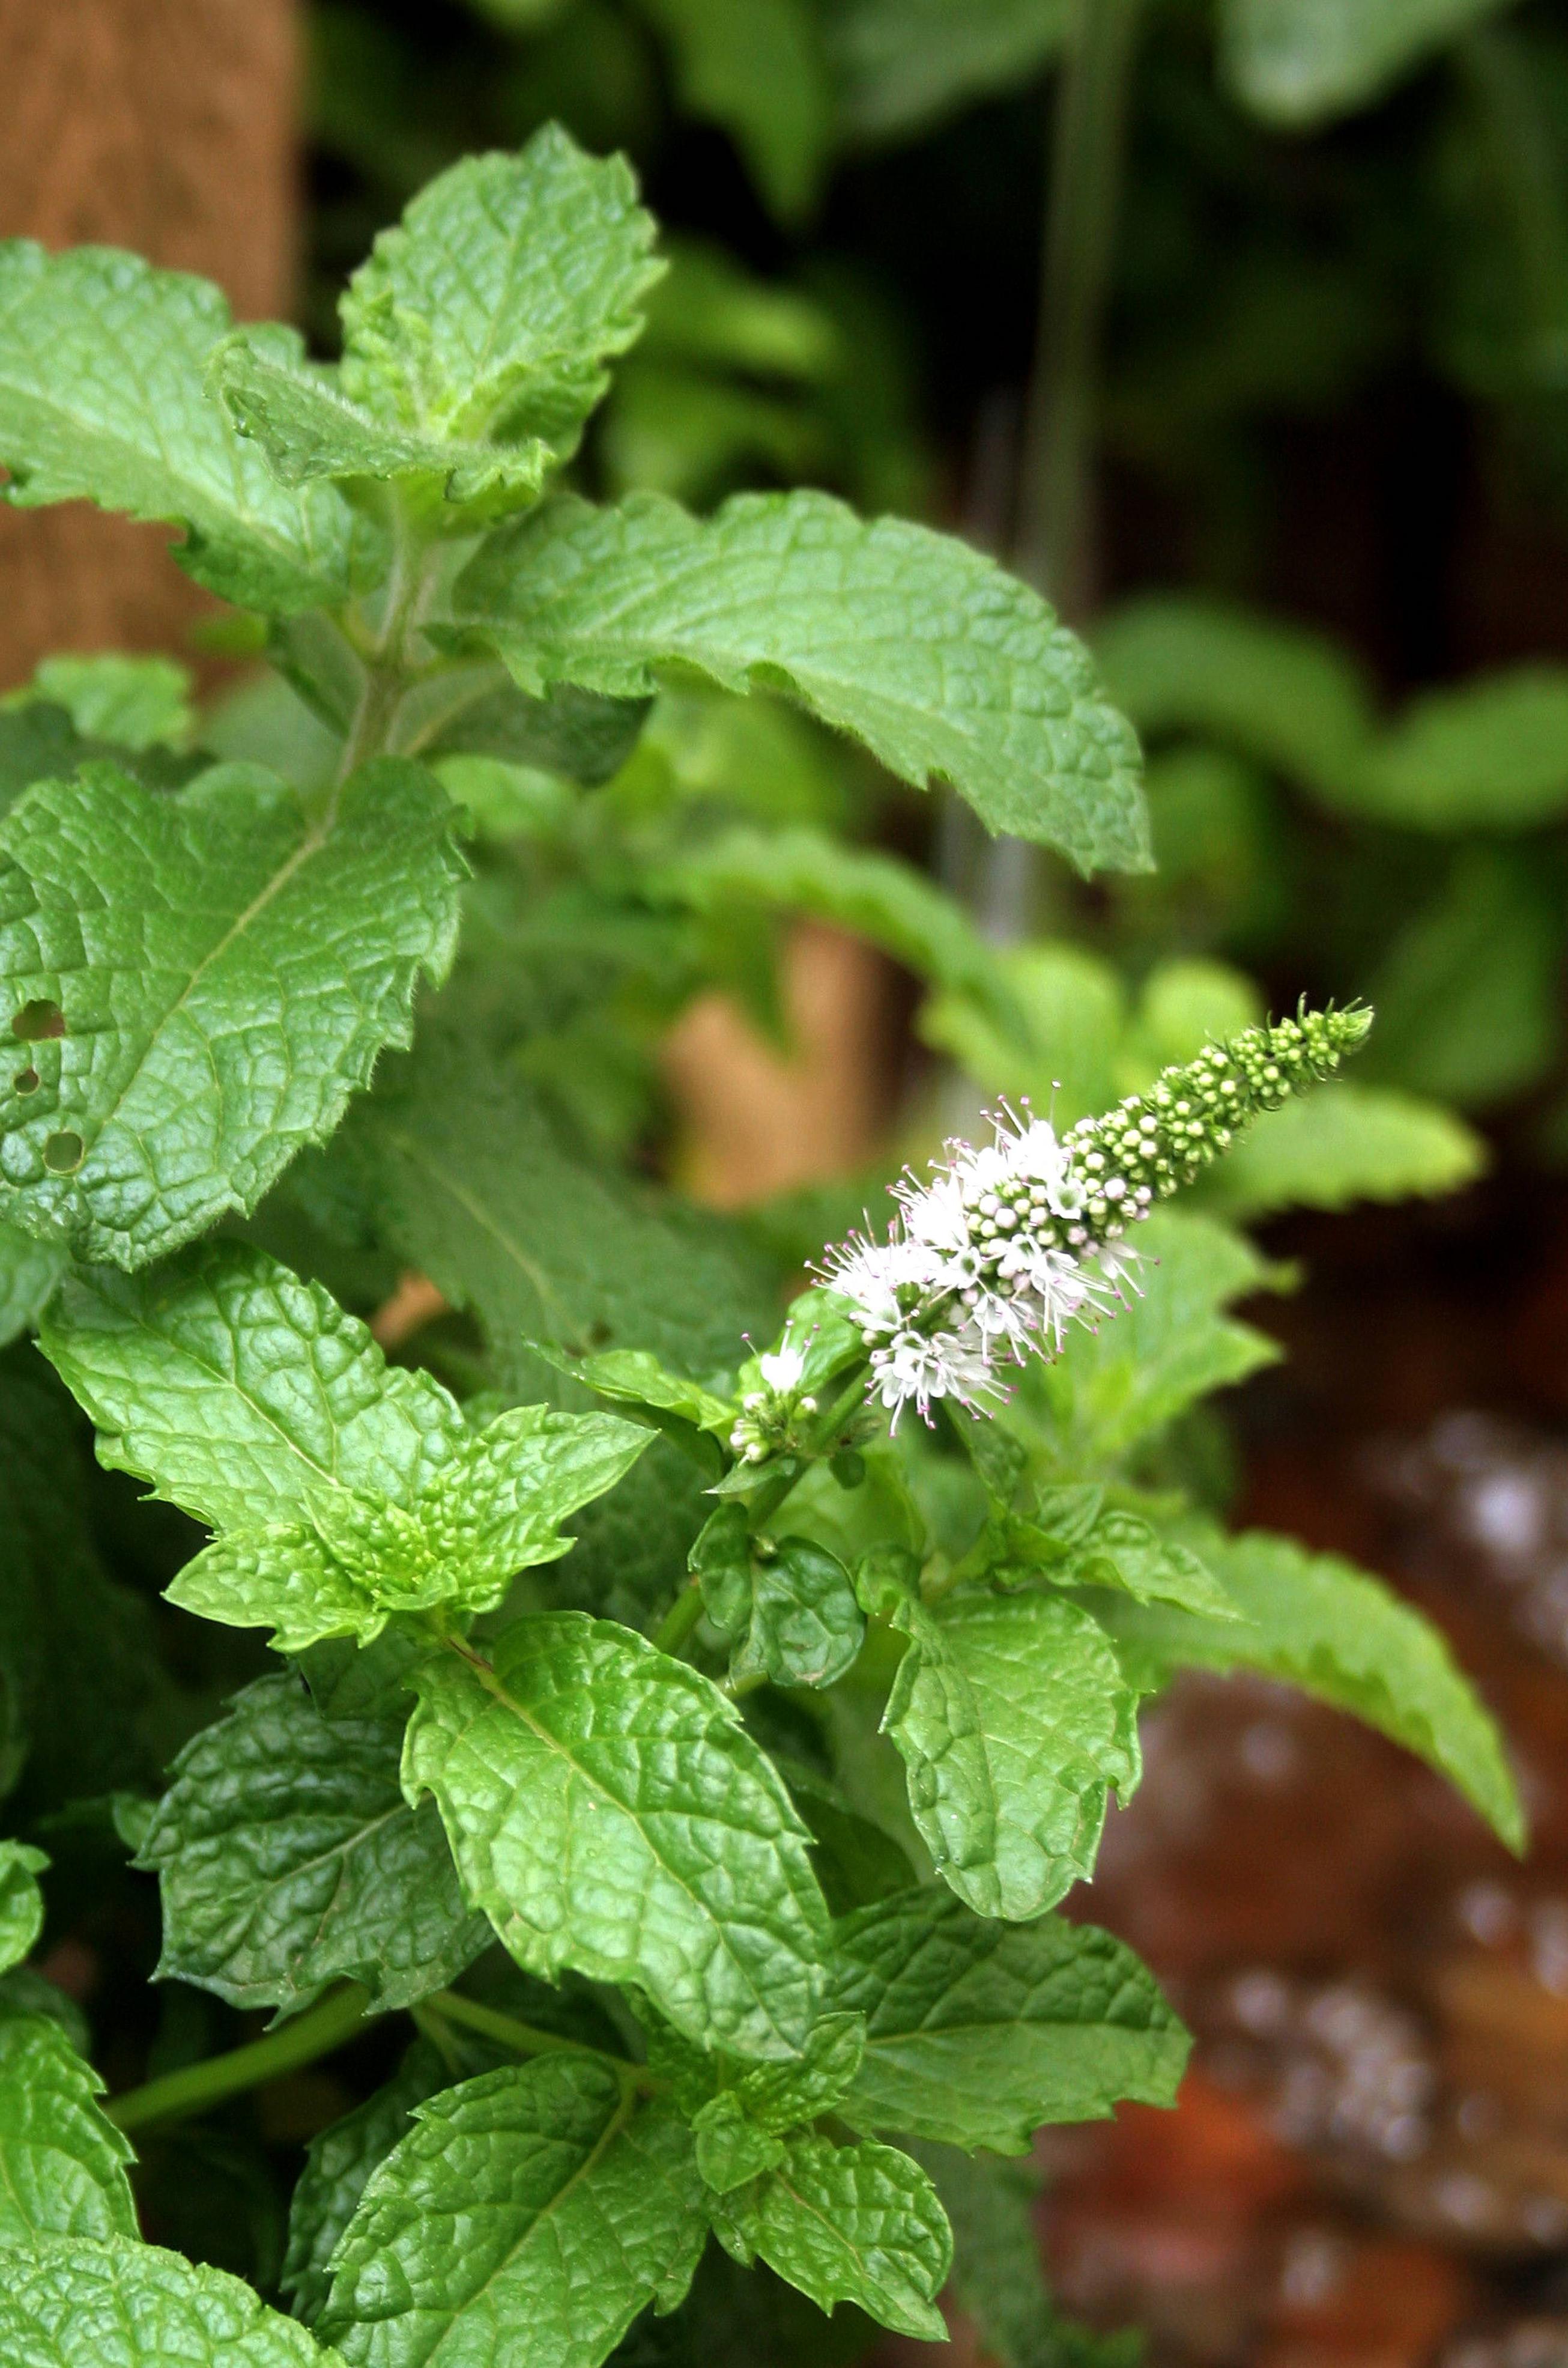 DIY Herb Garden - Growing herbs in Mason Jars
